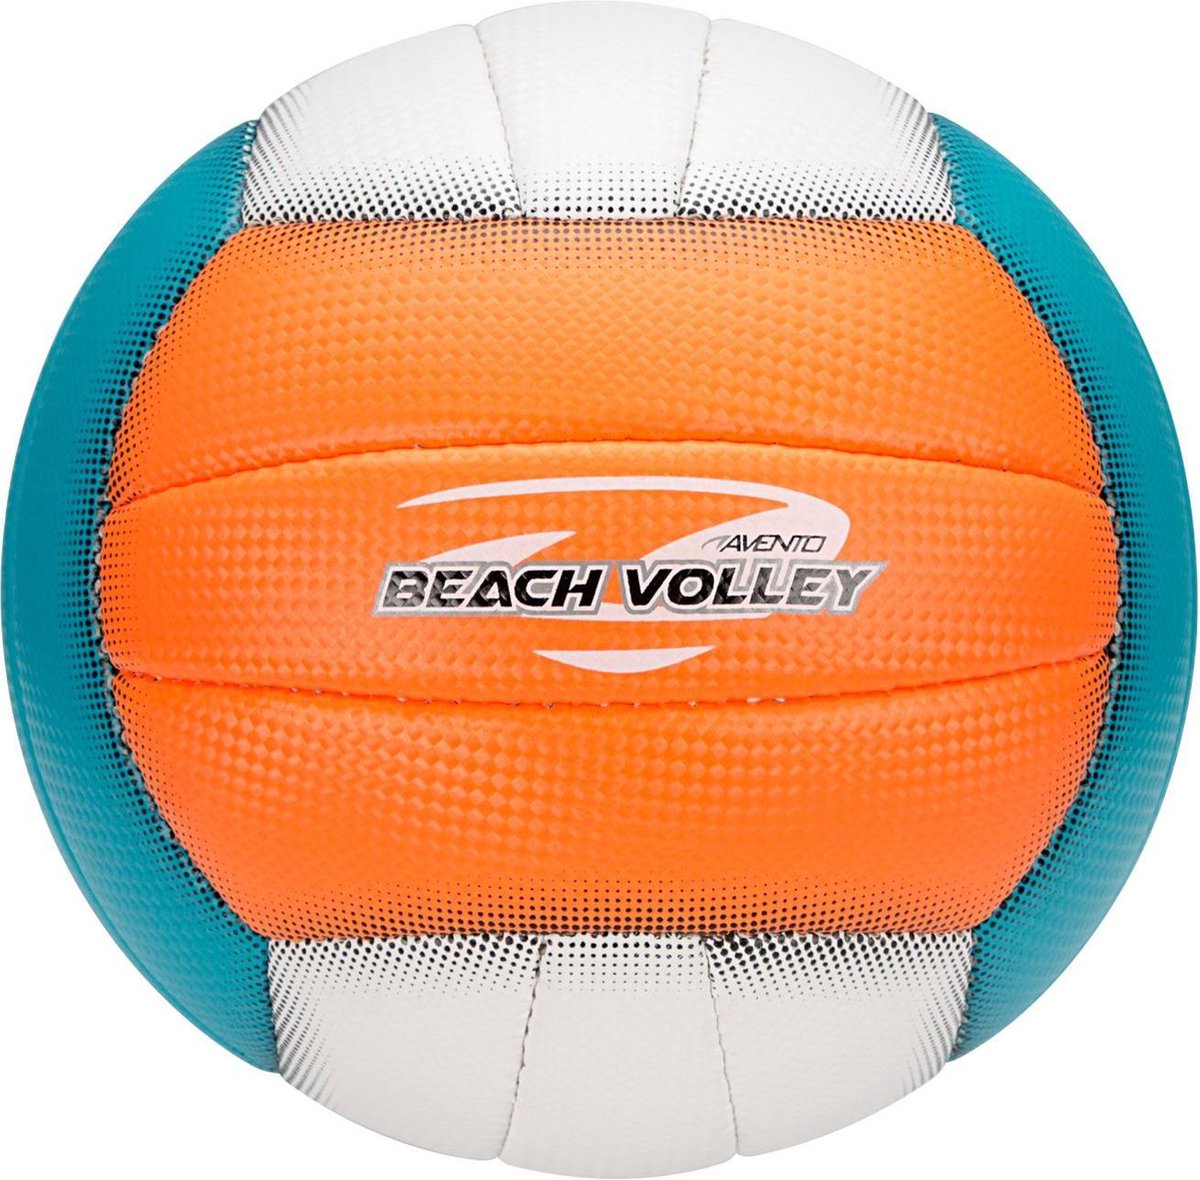 Se Avento Beach Volleyball Orange/Blå/Hvid - Beachvolleyball i standard størrelse - HURTIG LEVERING hos HomeX.dk